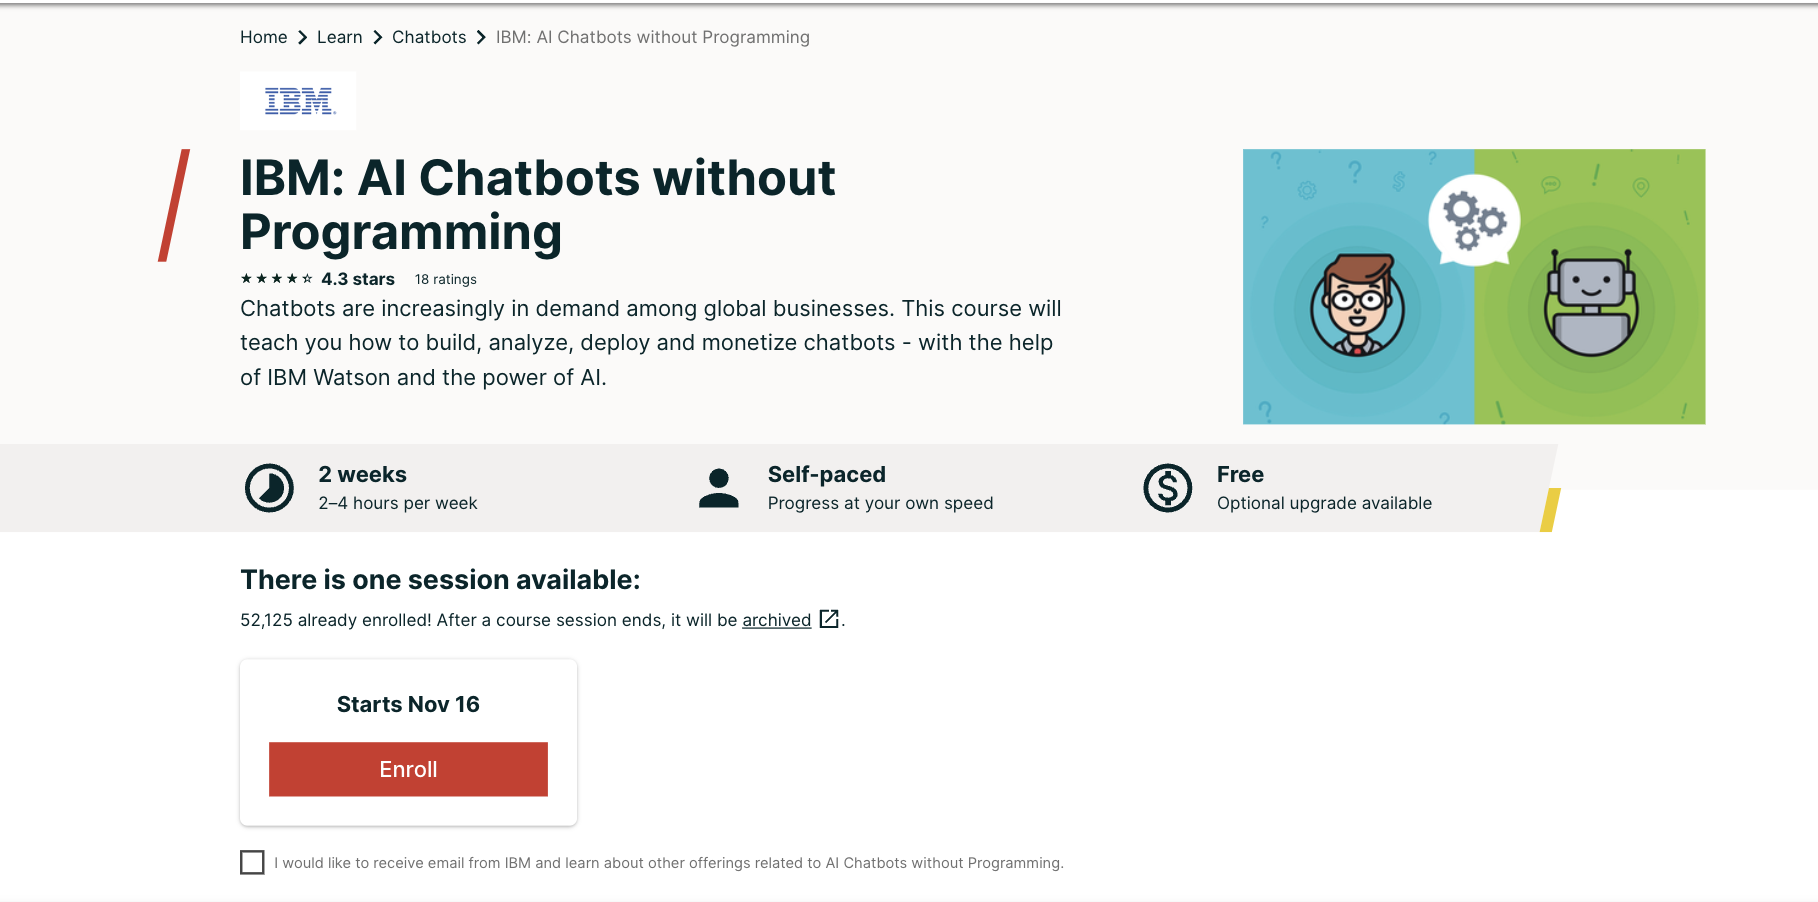 IBM: AI Chatbots without Programming